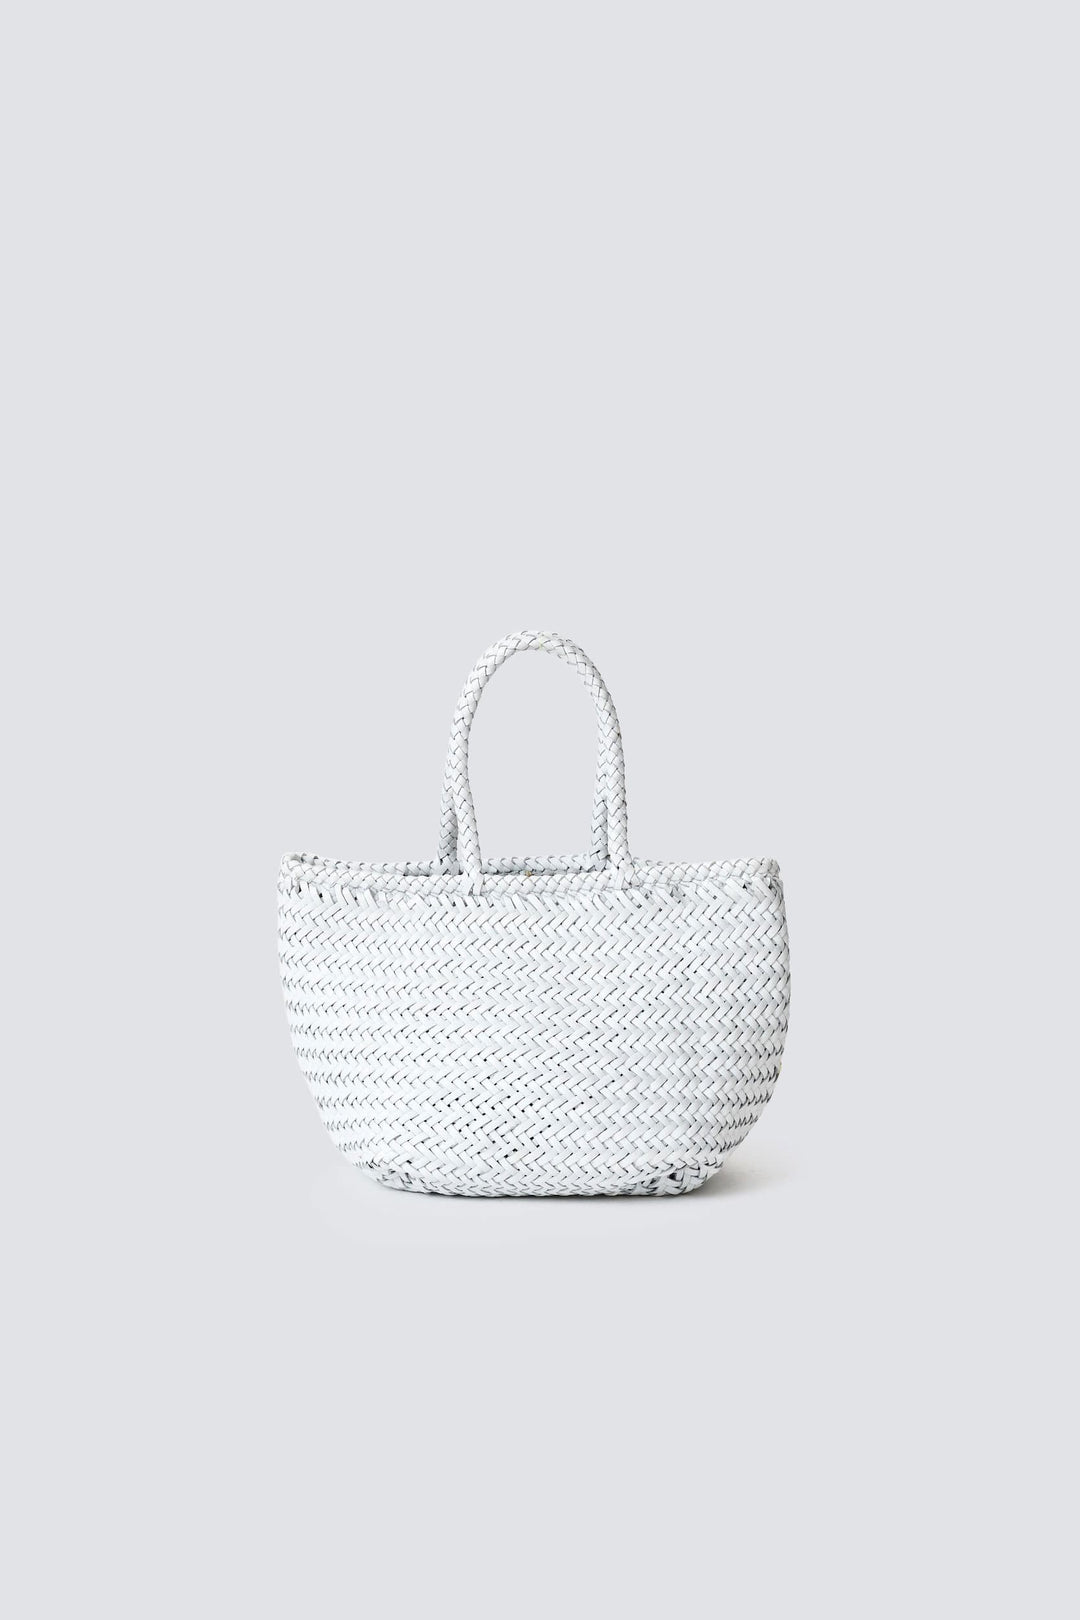 Dragon Diffusion woven leather bag handmade - Grace Basket Small White